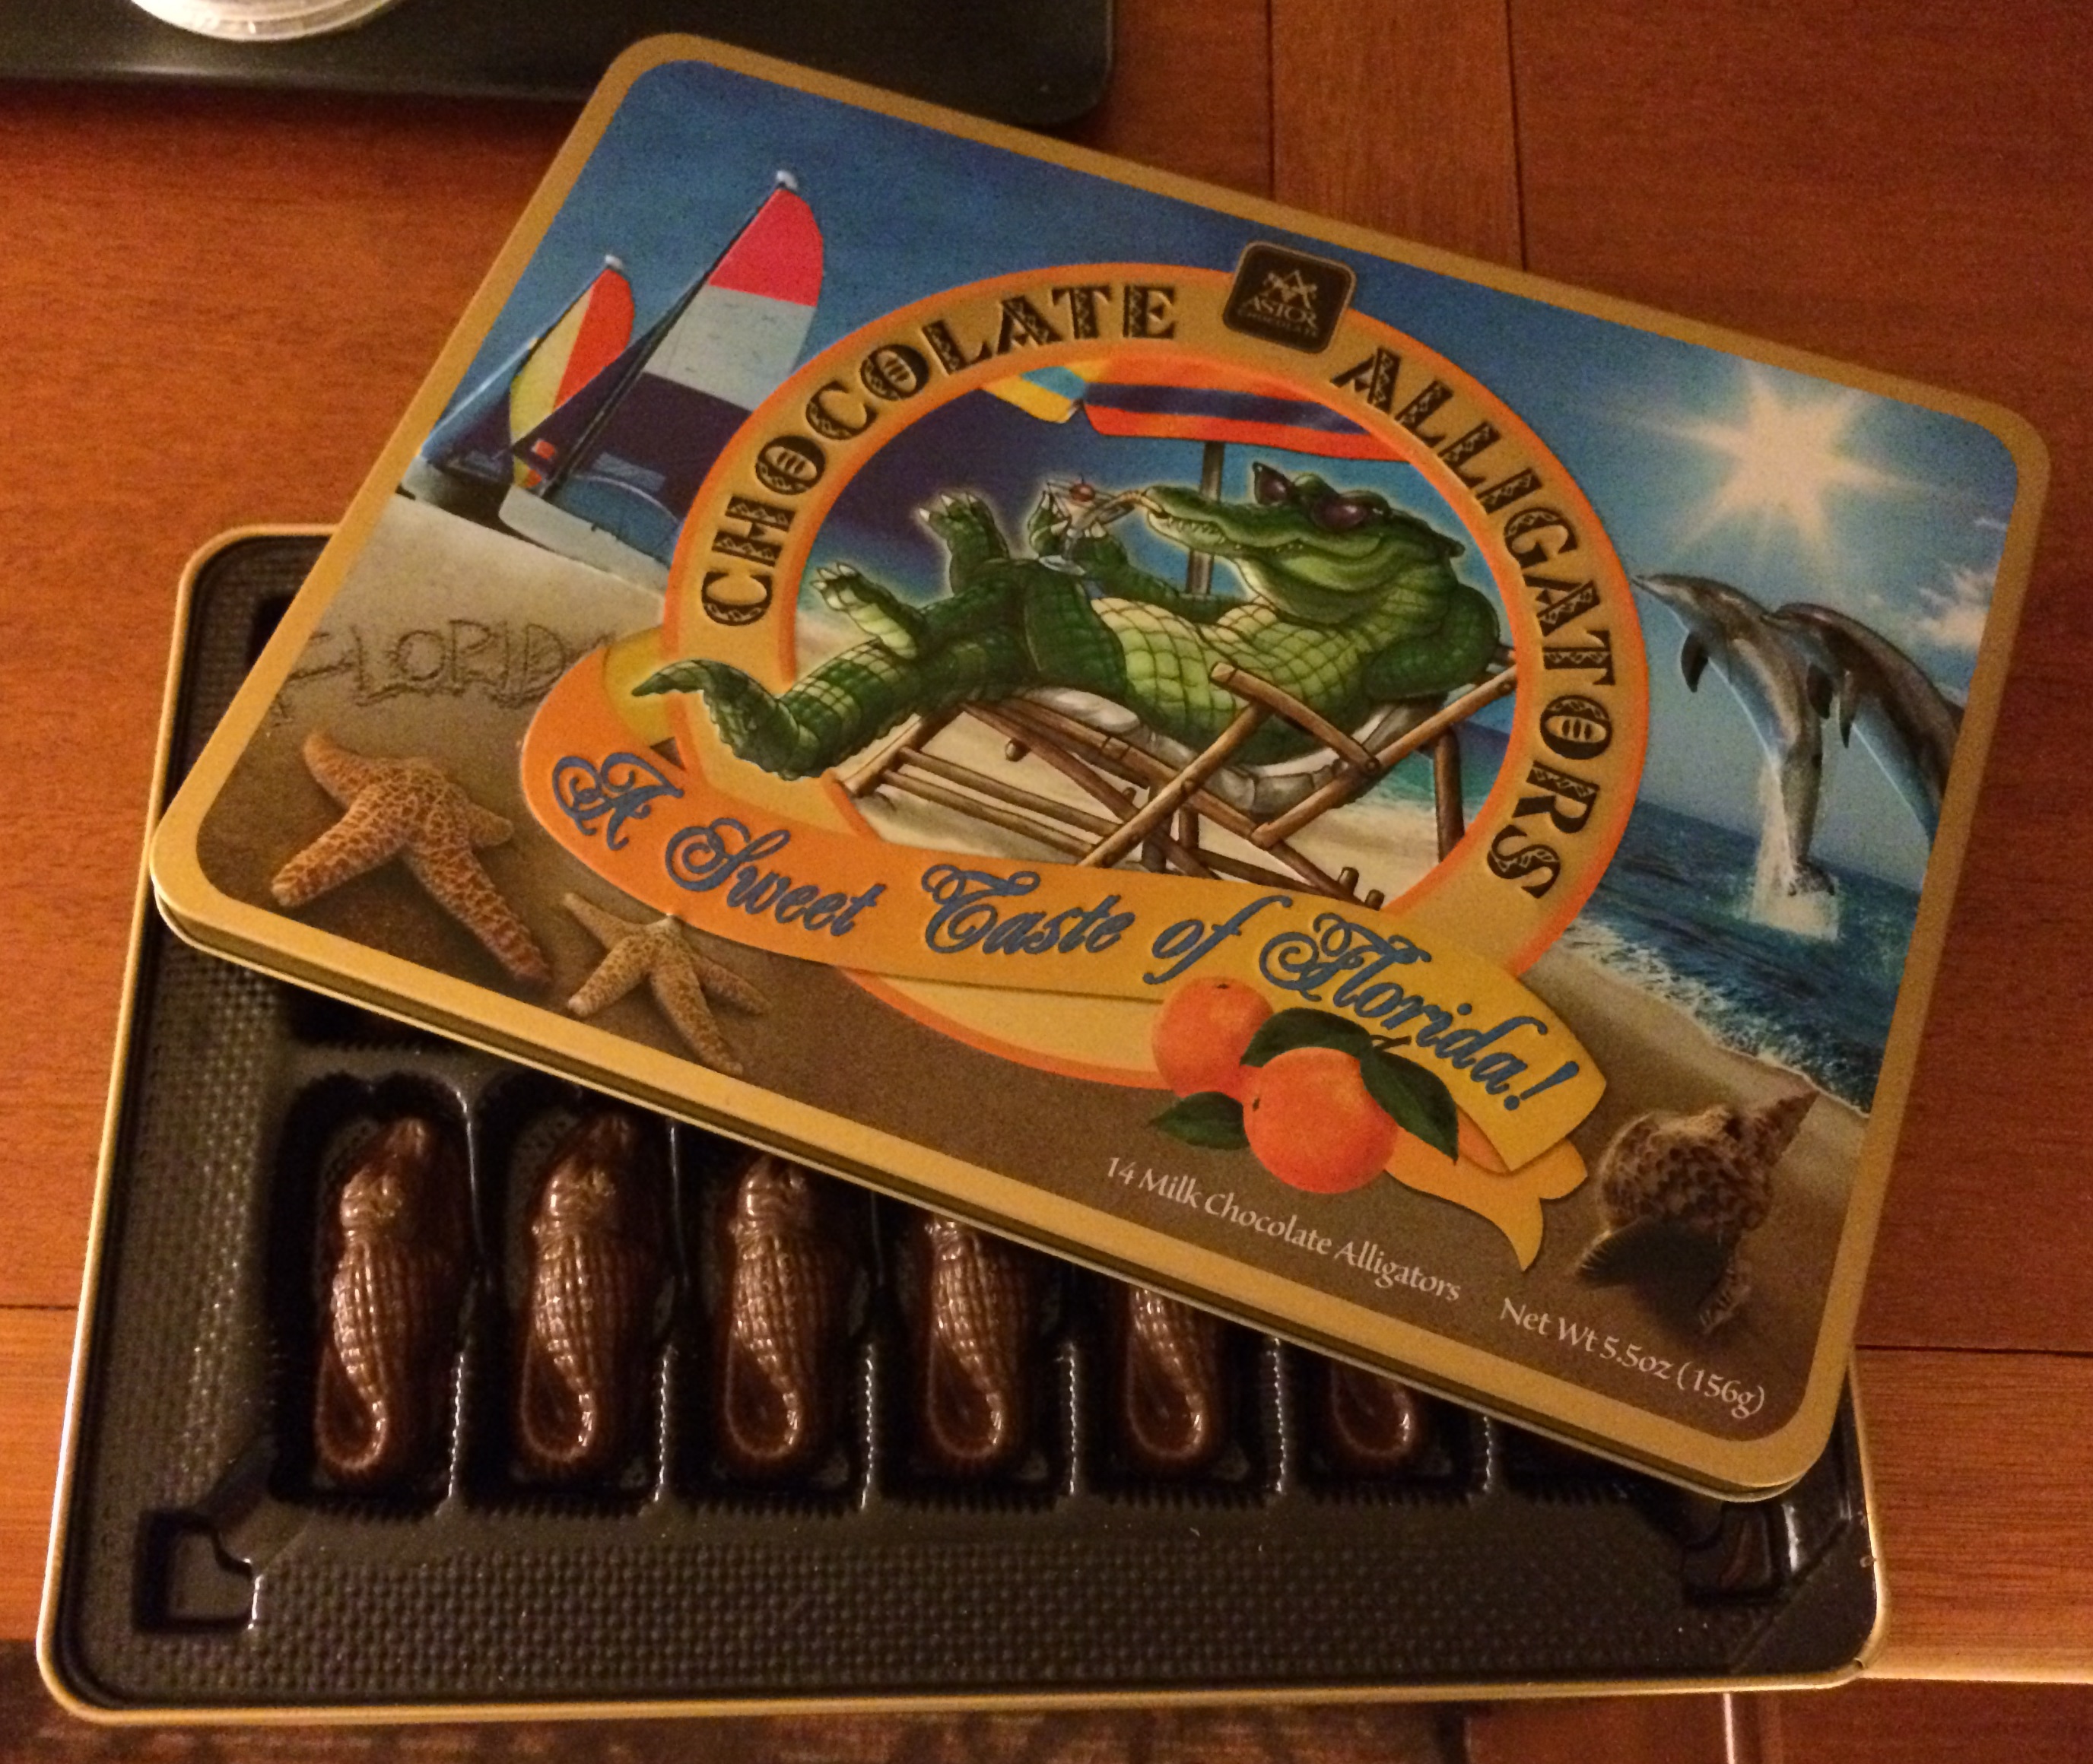 Chocolate Aligators